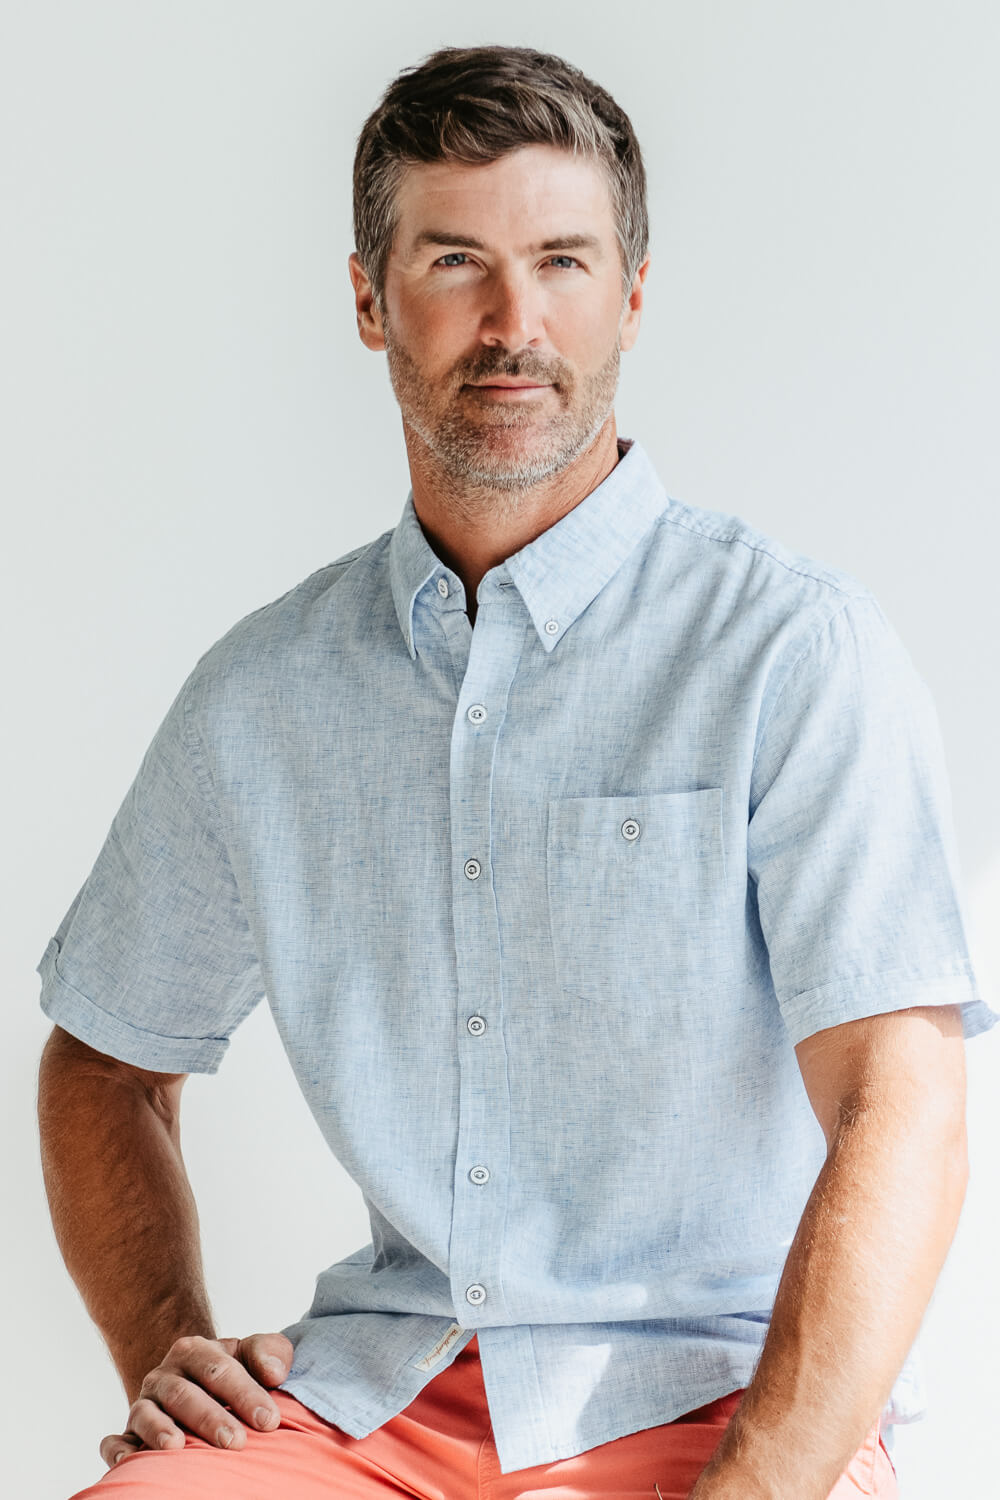 Weatherproof Vintage Linen Button Down Shirt for Men in Light Blue